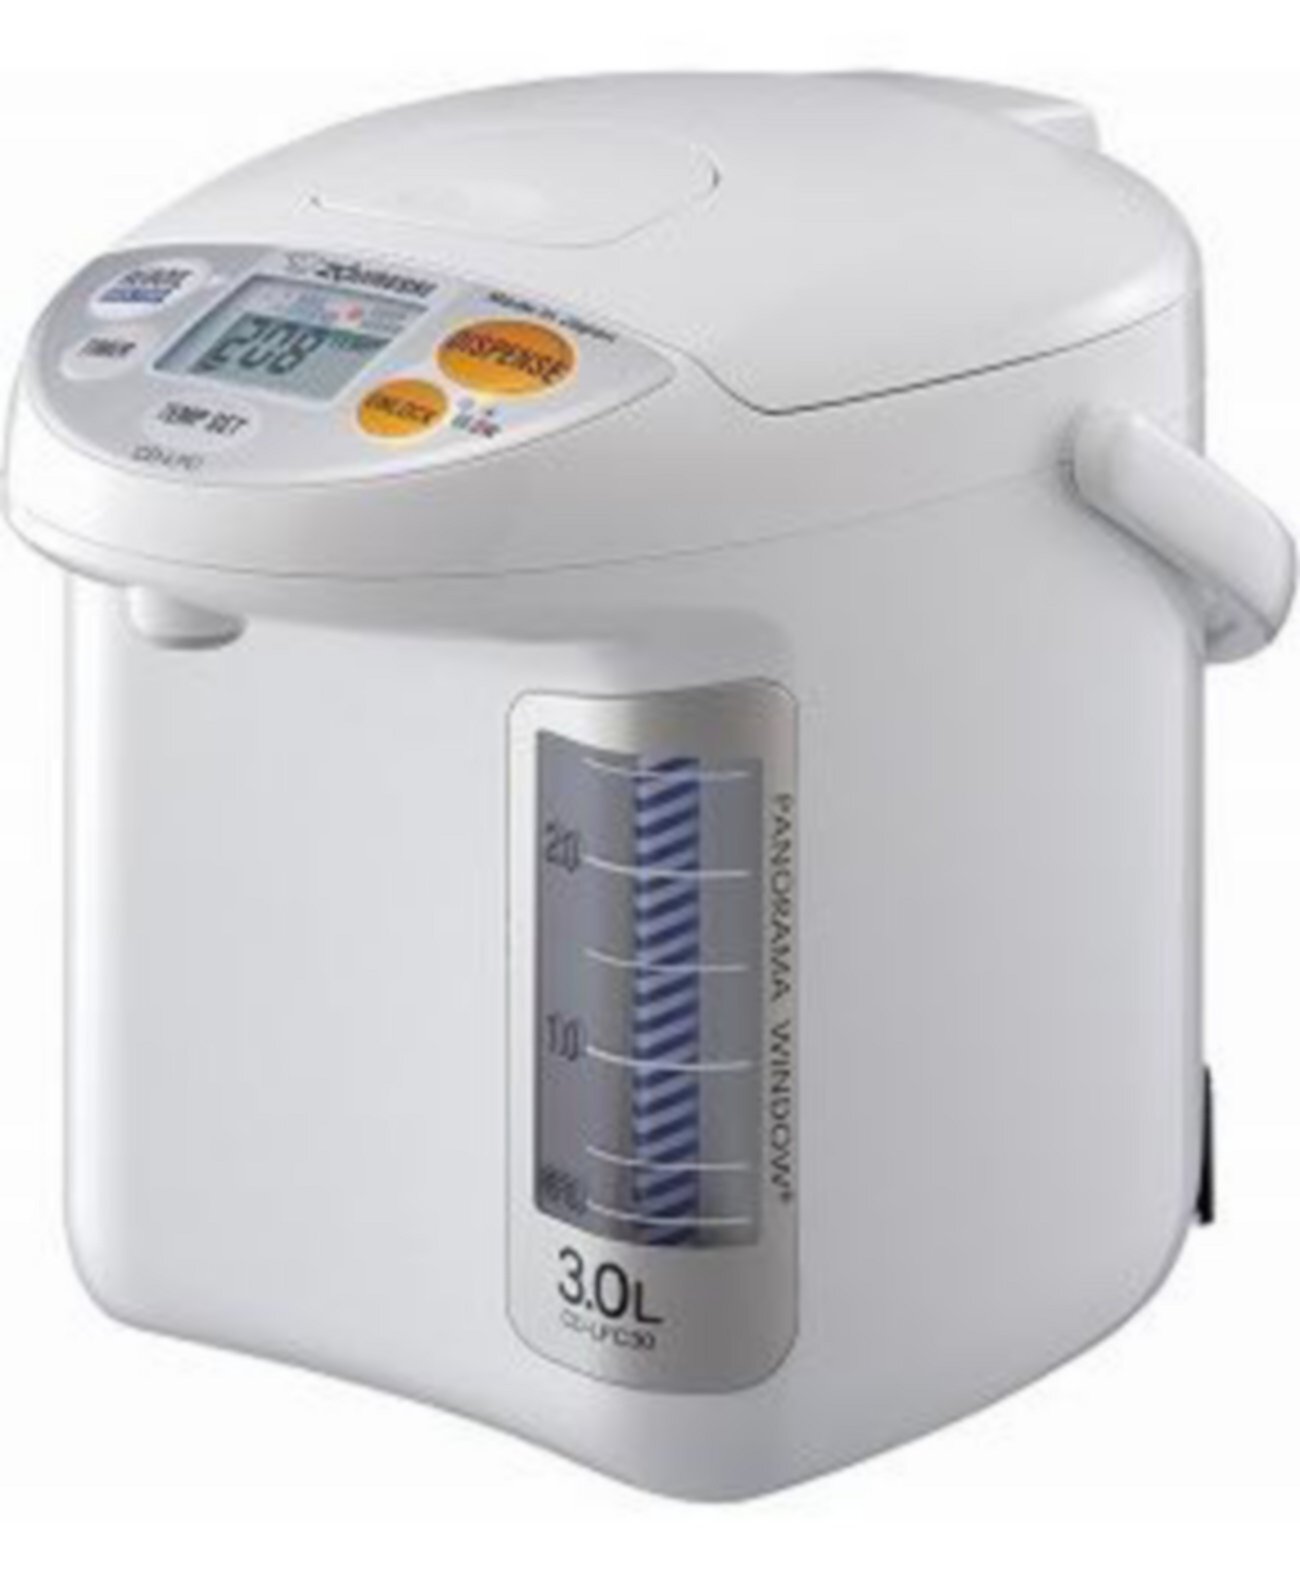 Cd-Lfc30 Micom Water Boiler And Warmer (101 Oz, White) Zojirushi